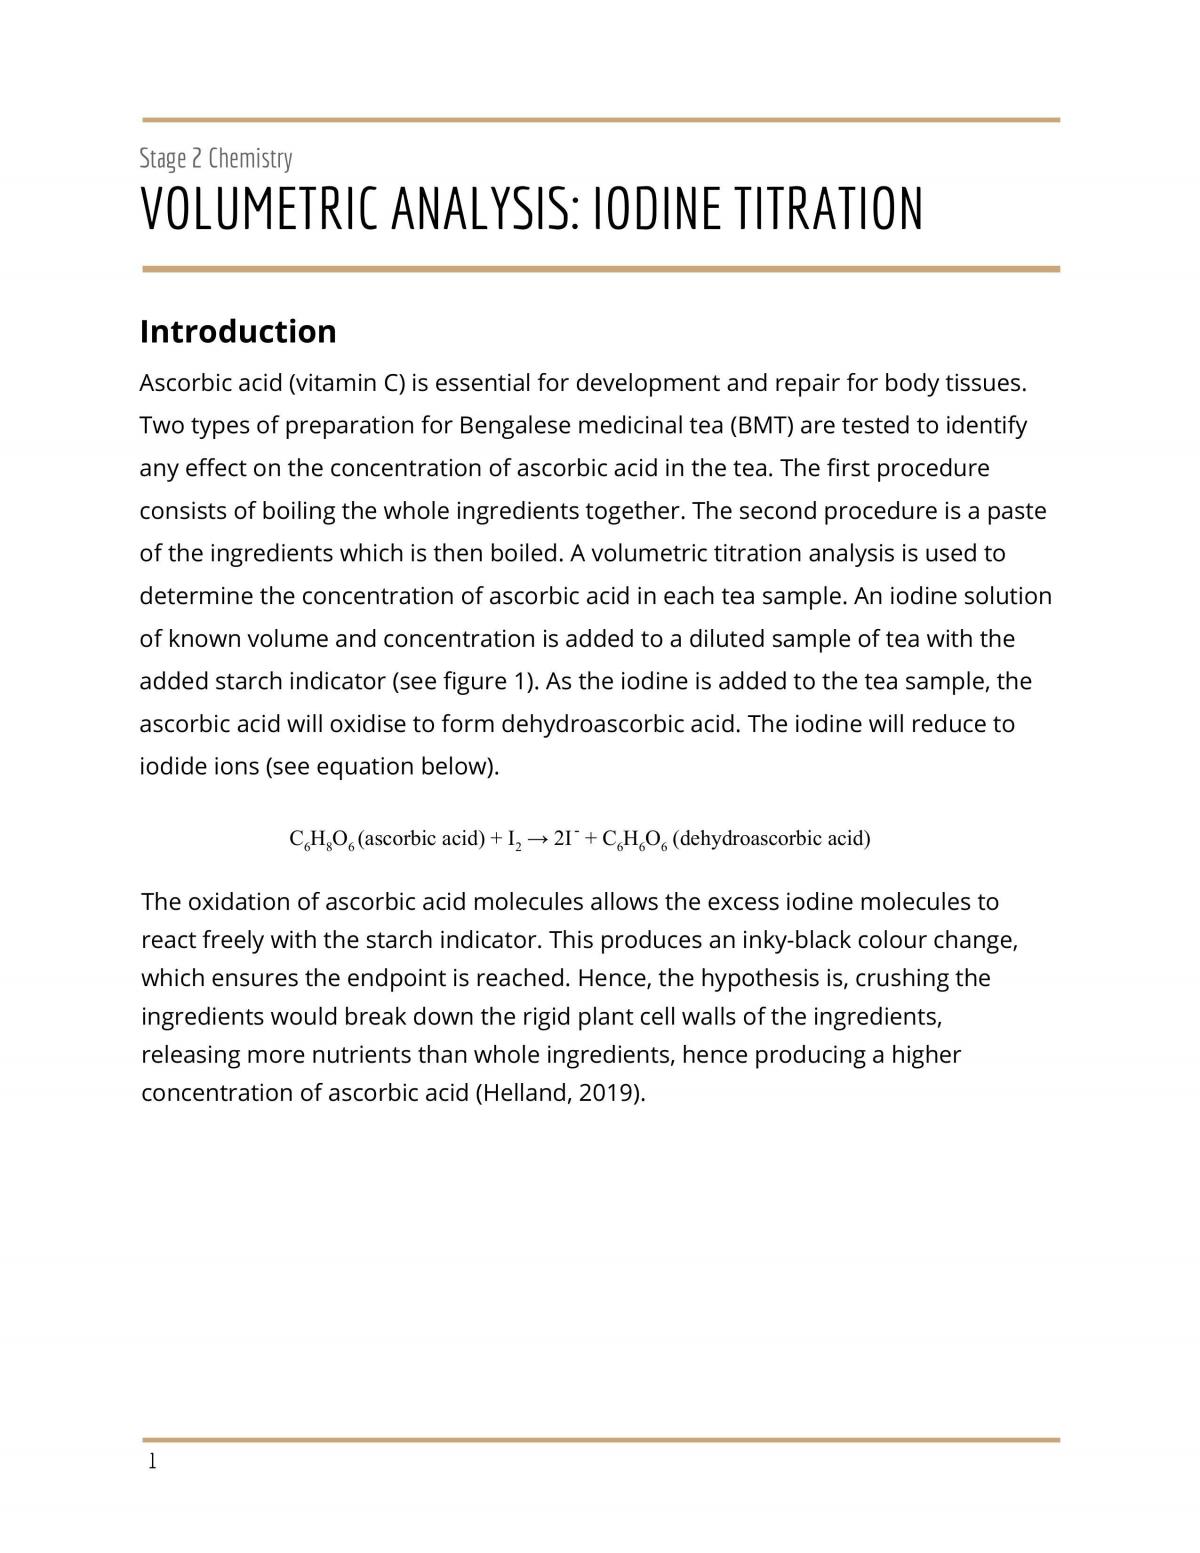 essay about volumetric analysis